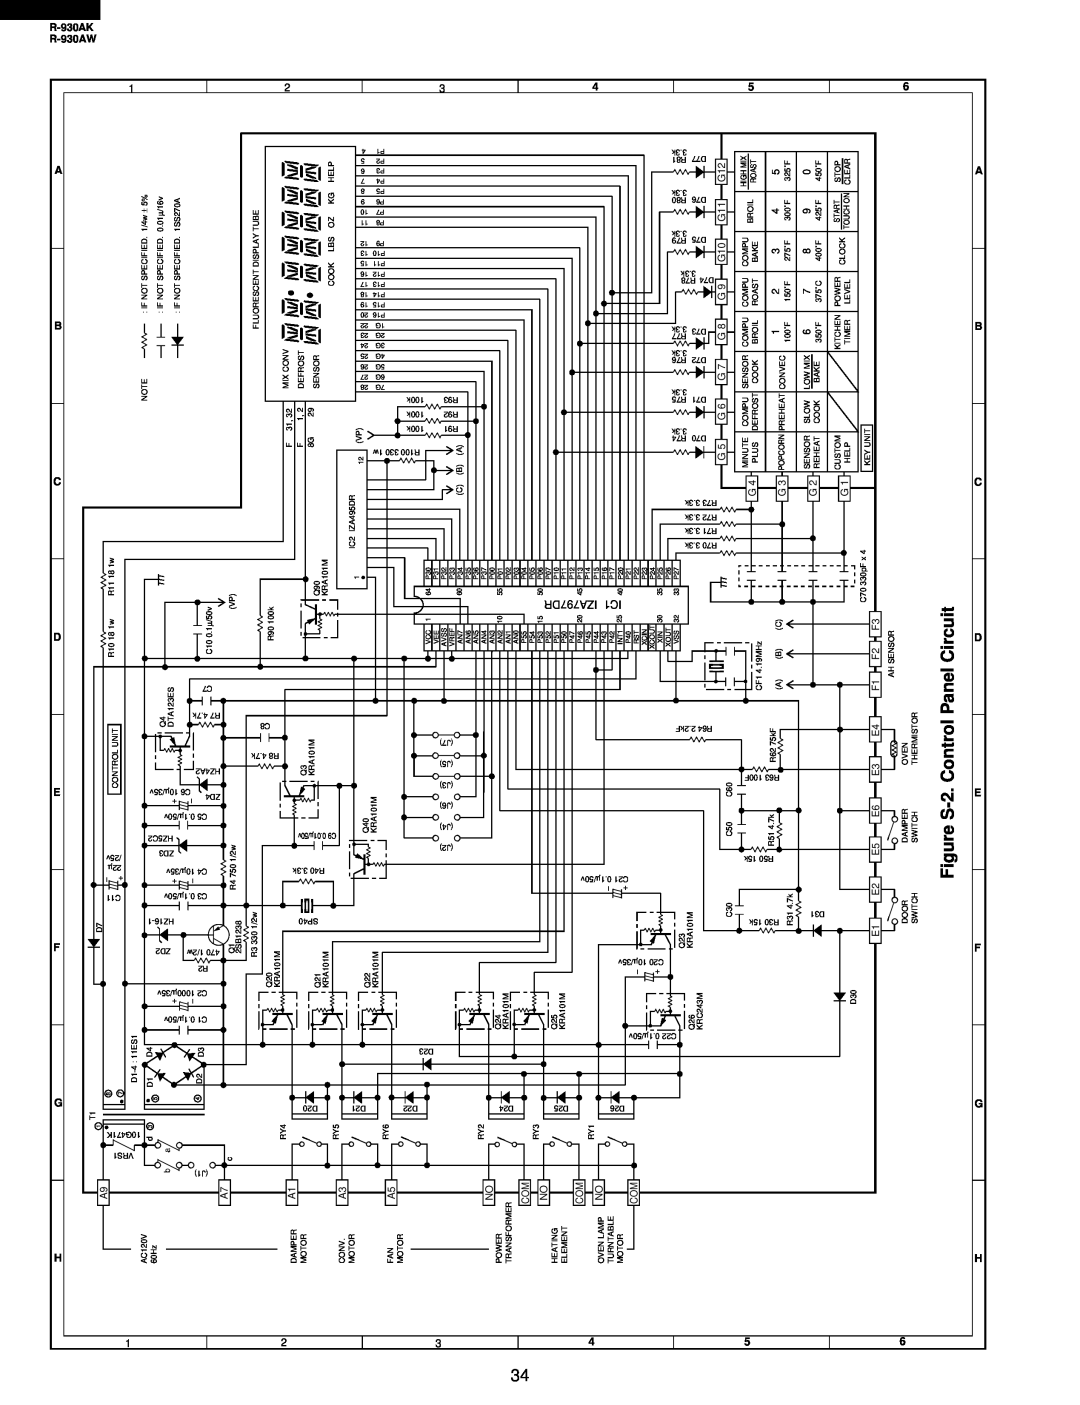 Sharp R-930AW service manual Circuit, Control Panel, Figure S-2, IZA797DR IC1 